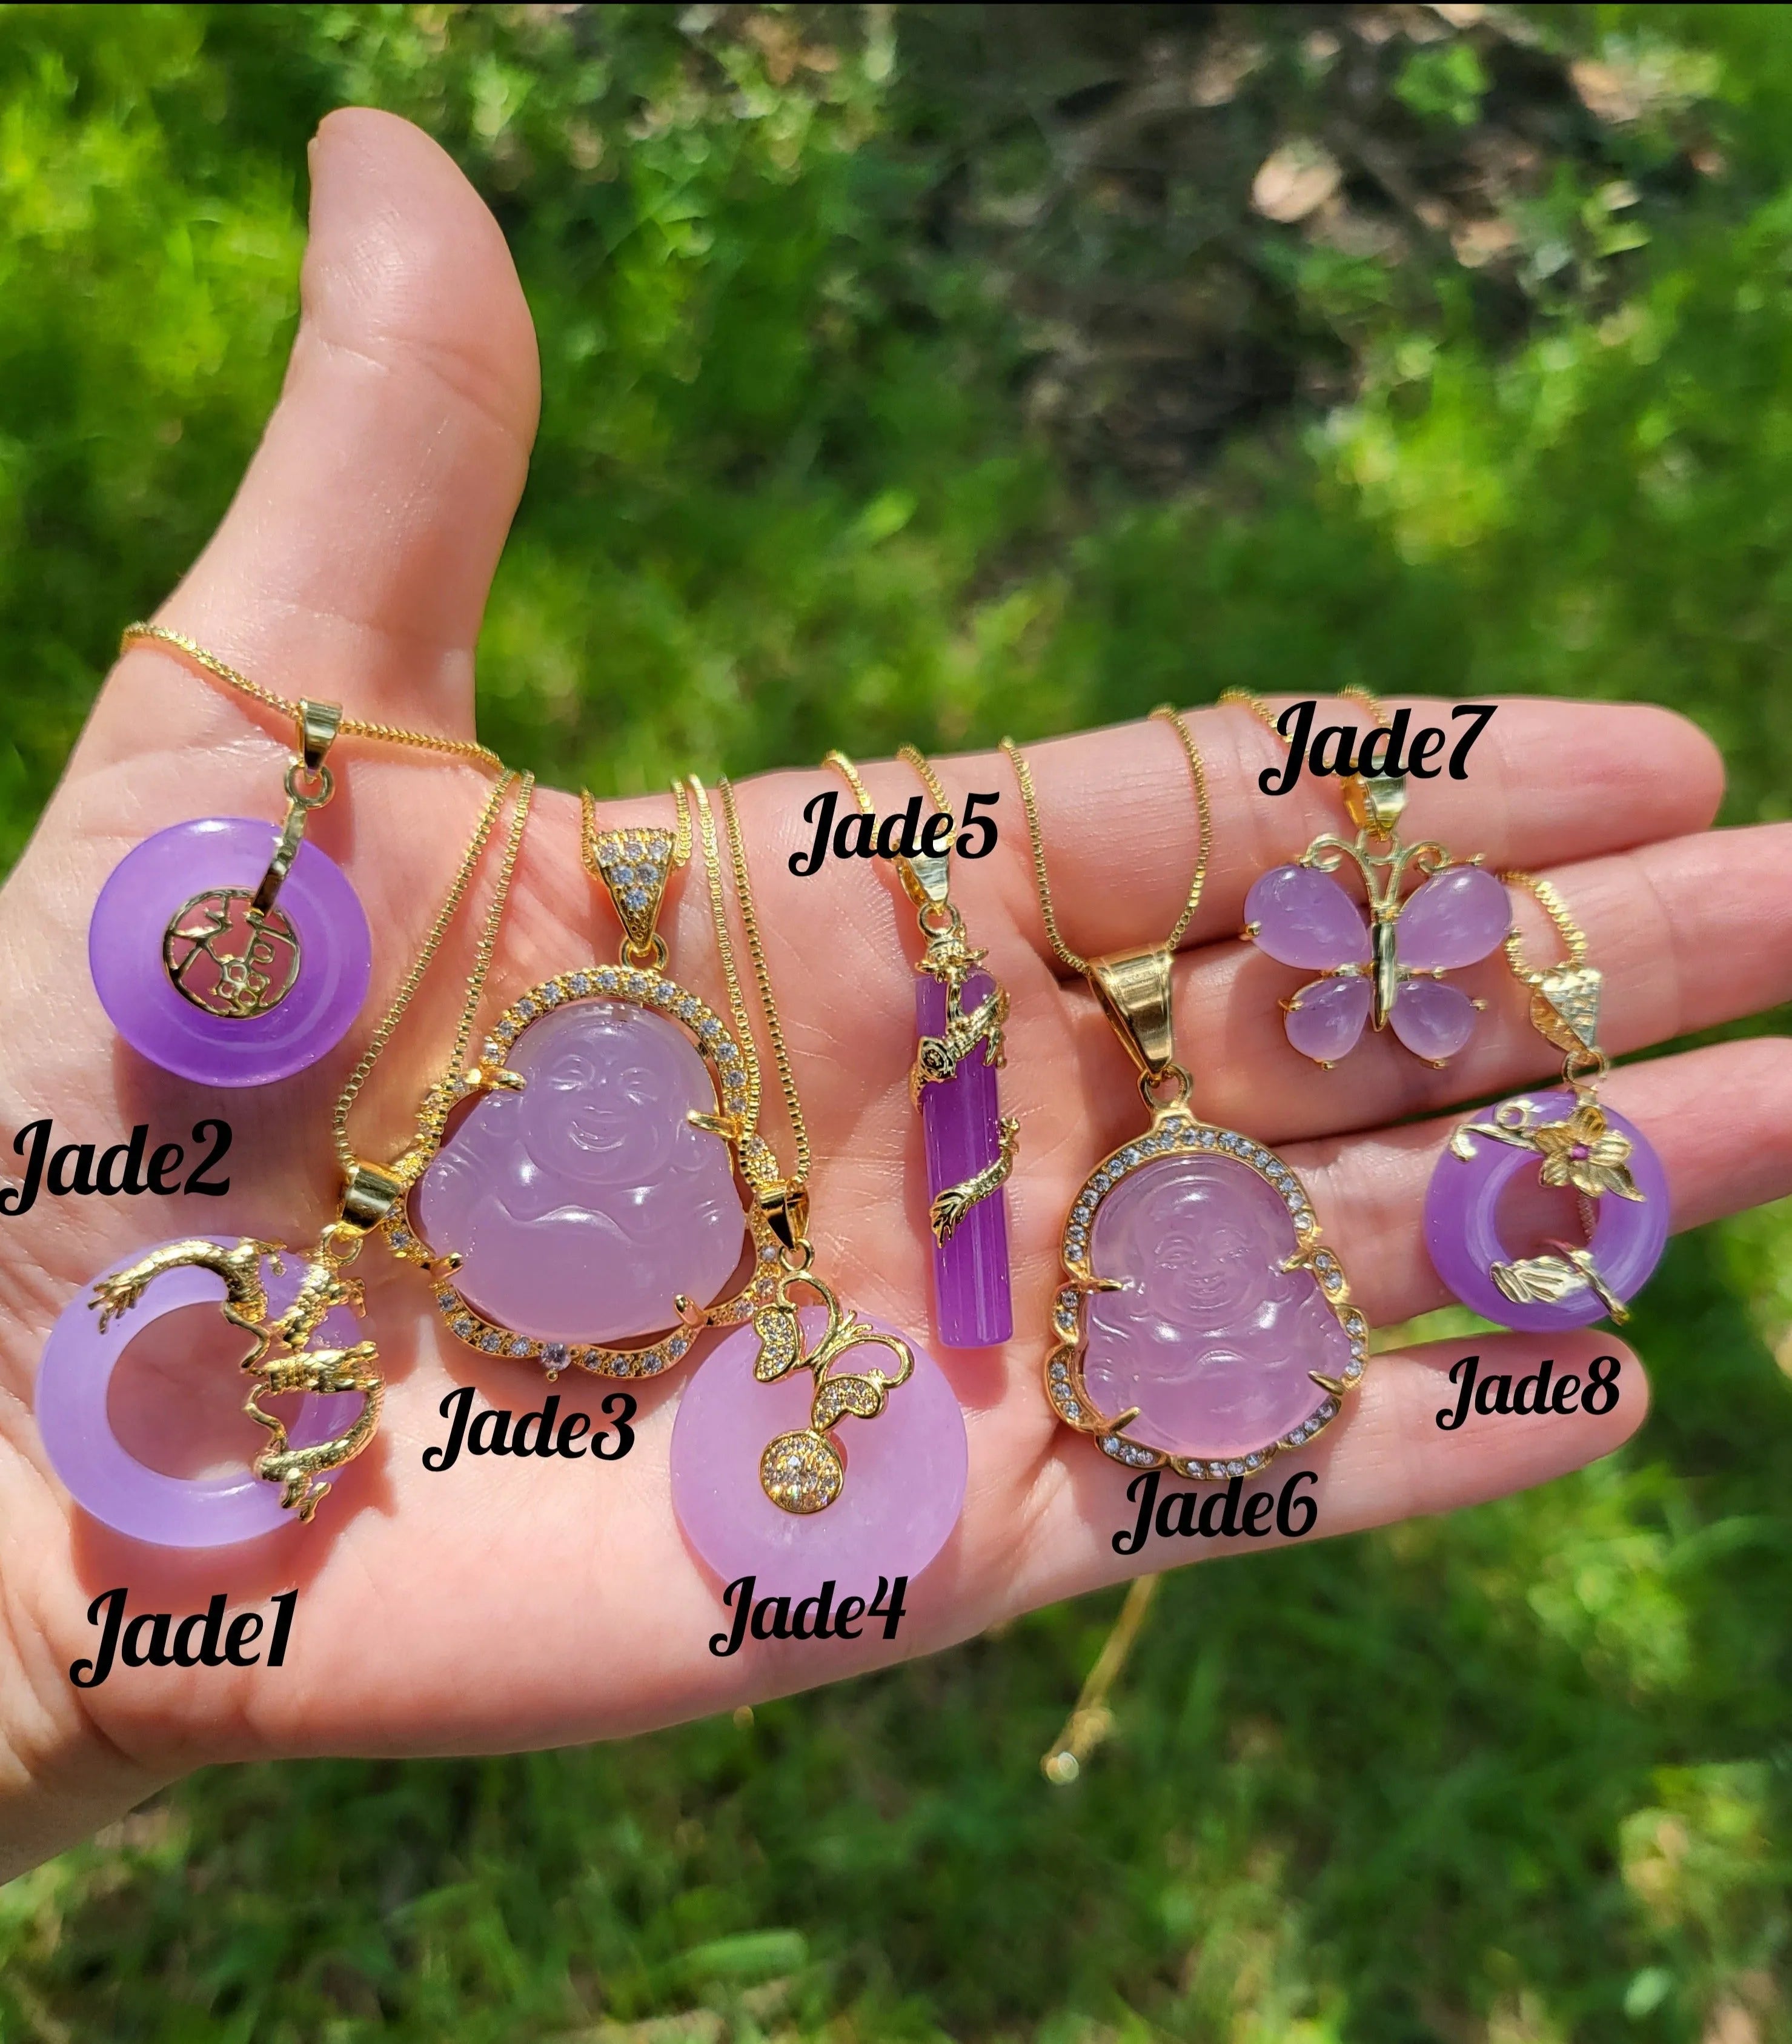 Gold Filled Lavender Jade Necklace product images.